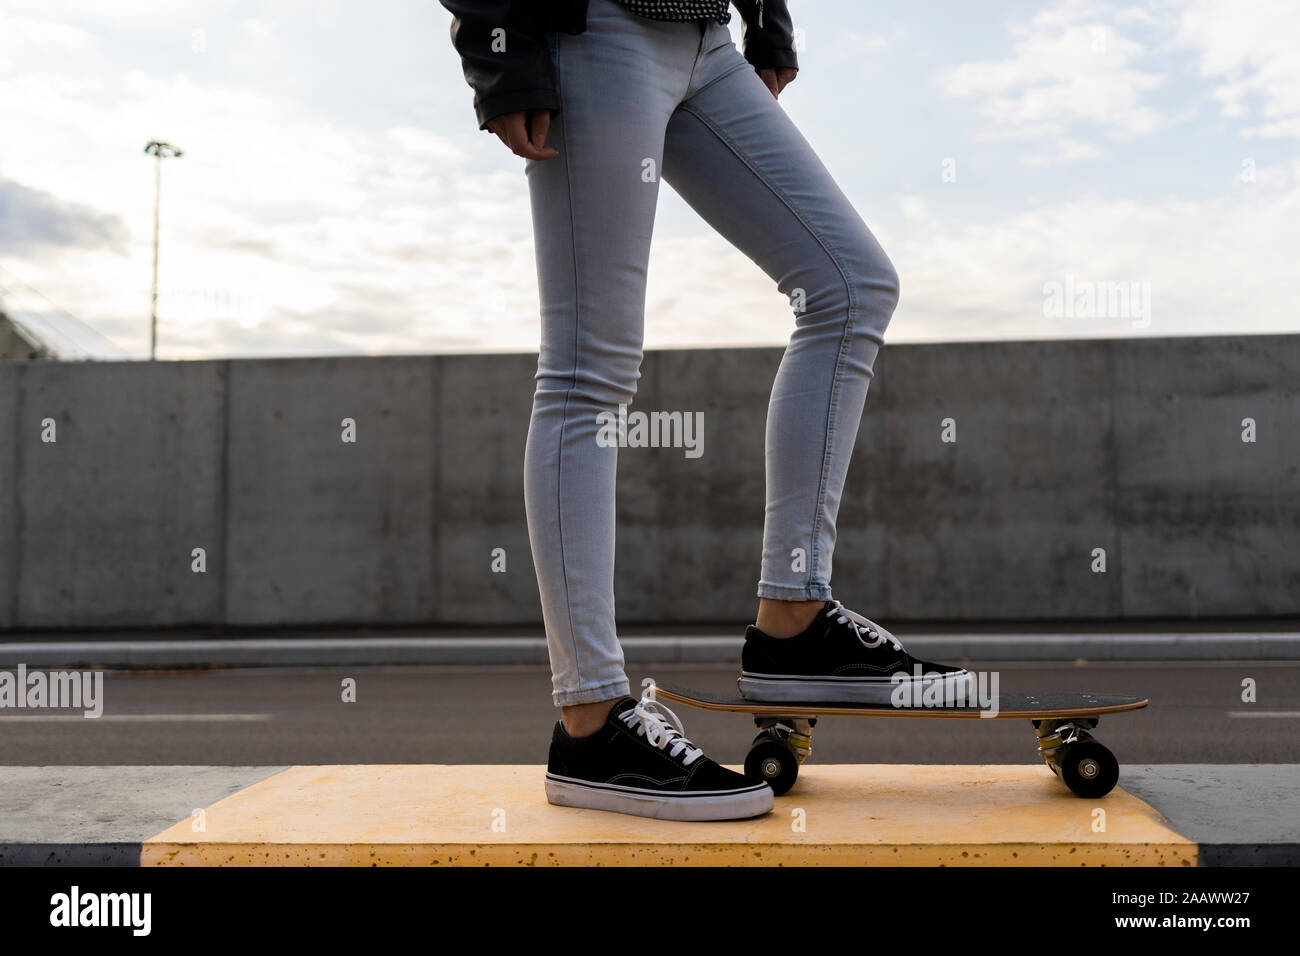 Legs of woman with skateboard standing on bollard Stock Photo